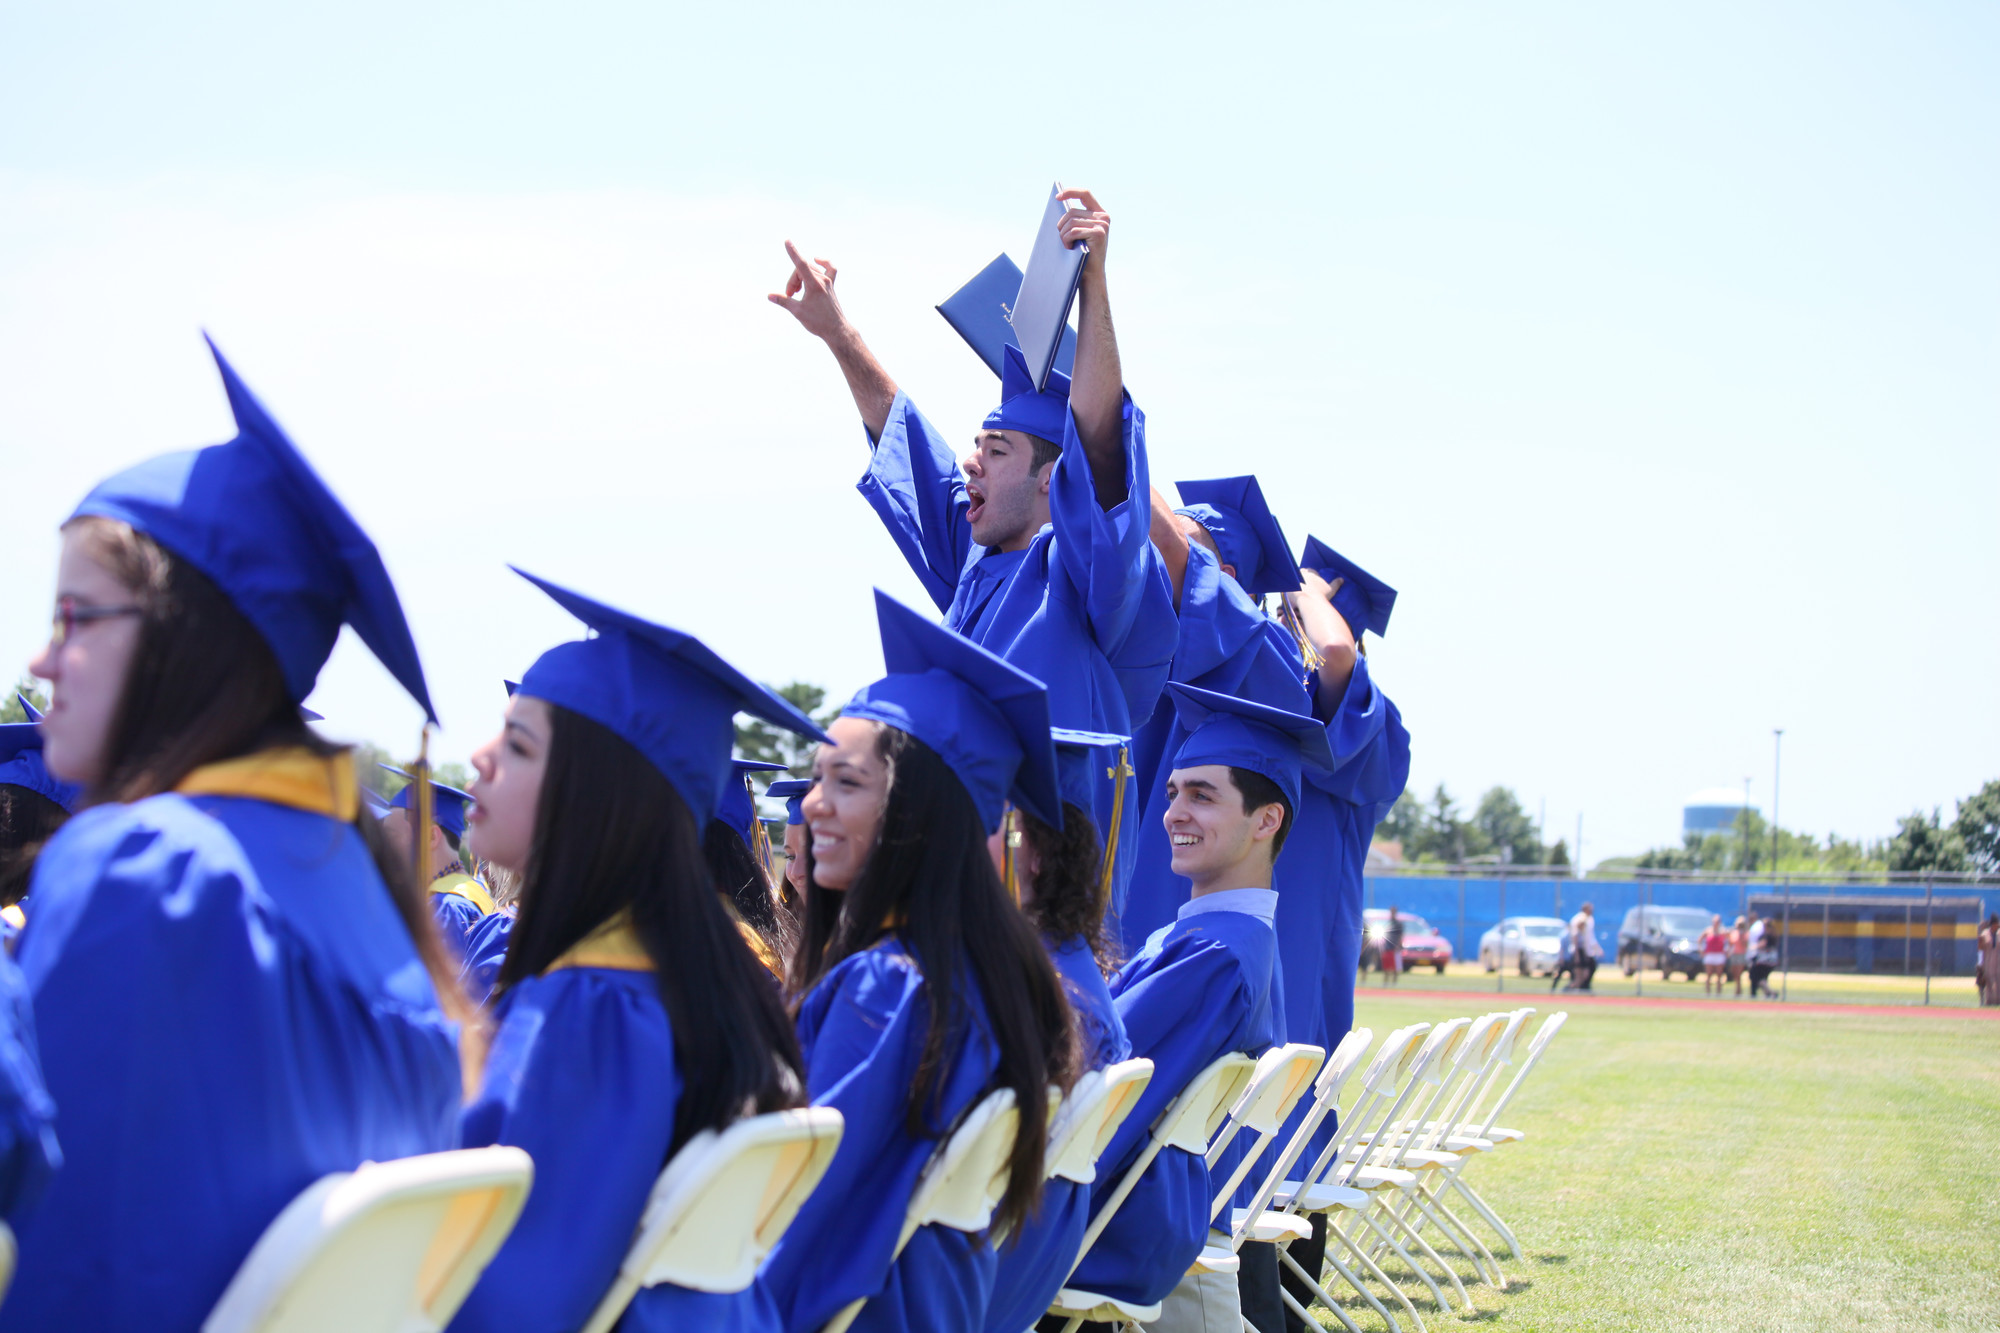 graduating seniors cheered as their classmates’ names were called to receive their diplomas.